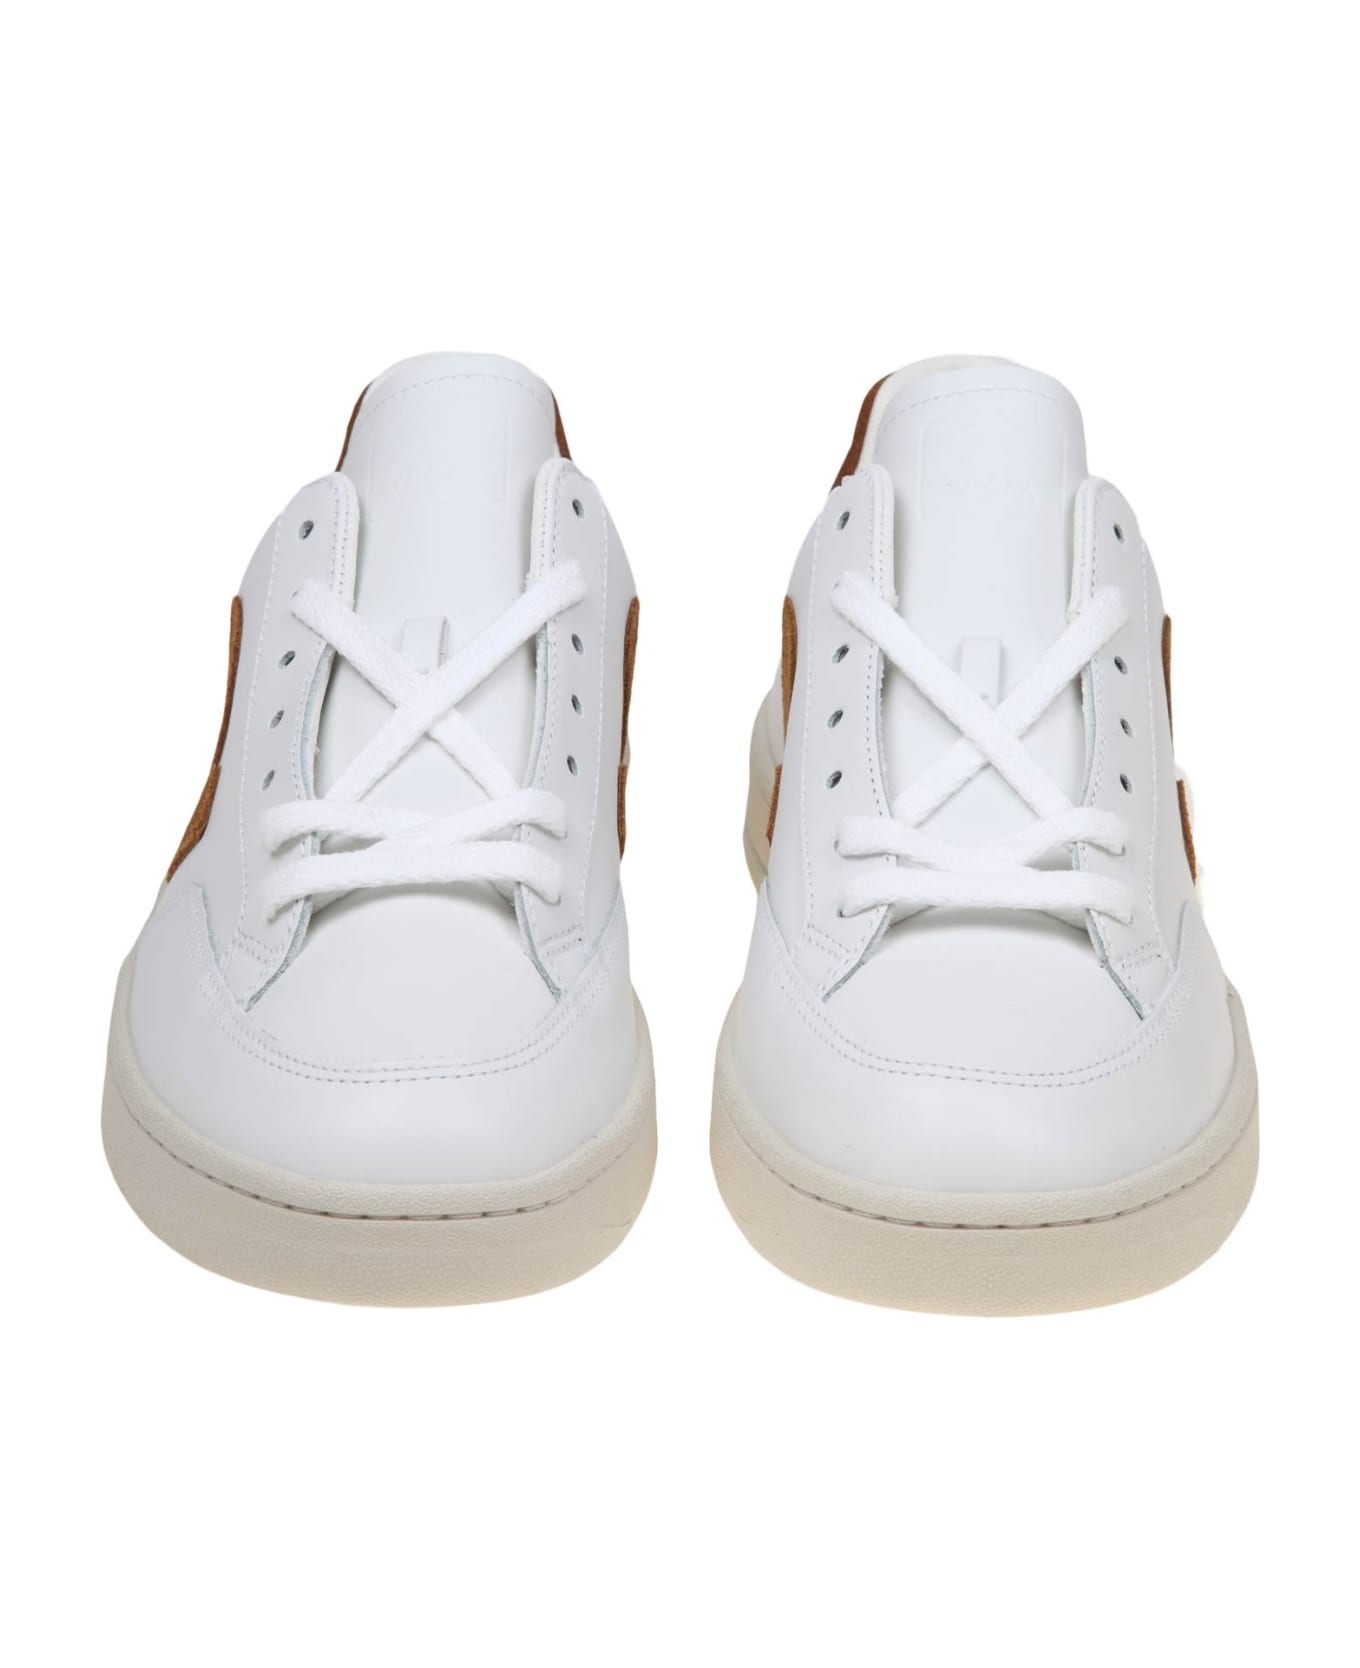 Veja V 90 Sneakers In White And Camel Leather - WHITE/CAMEL スニーカー